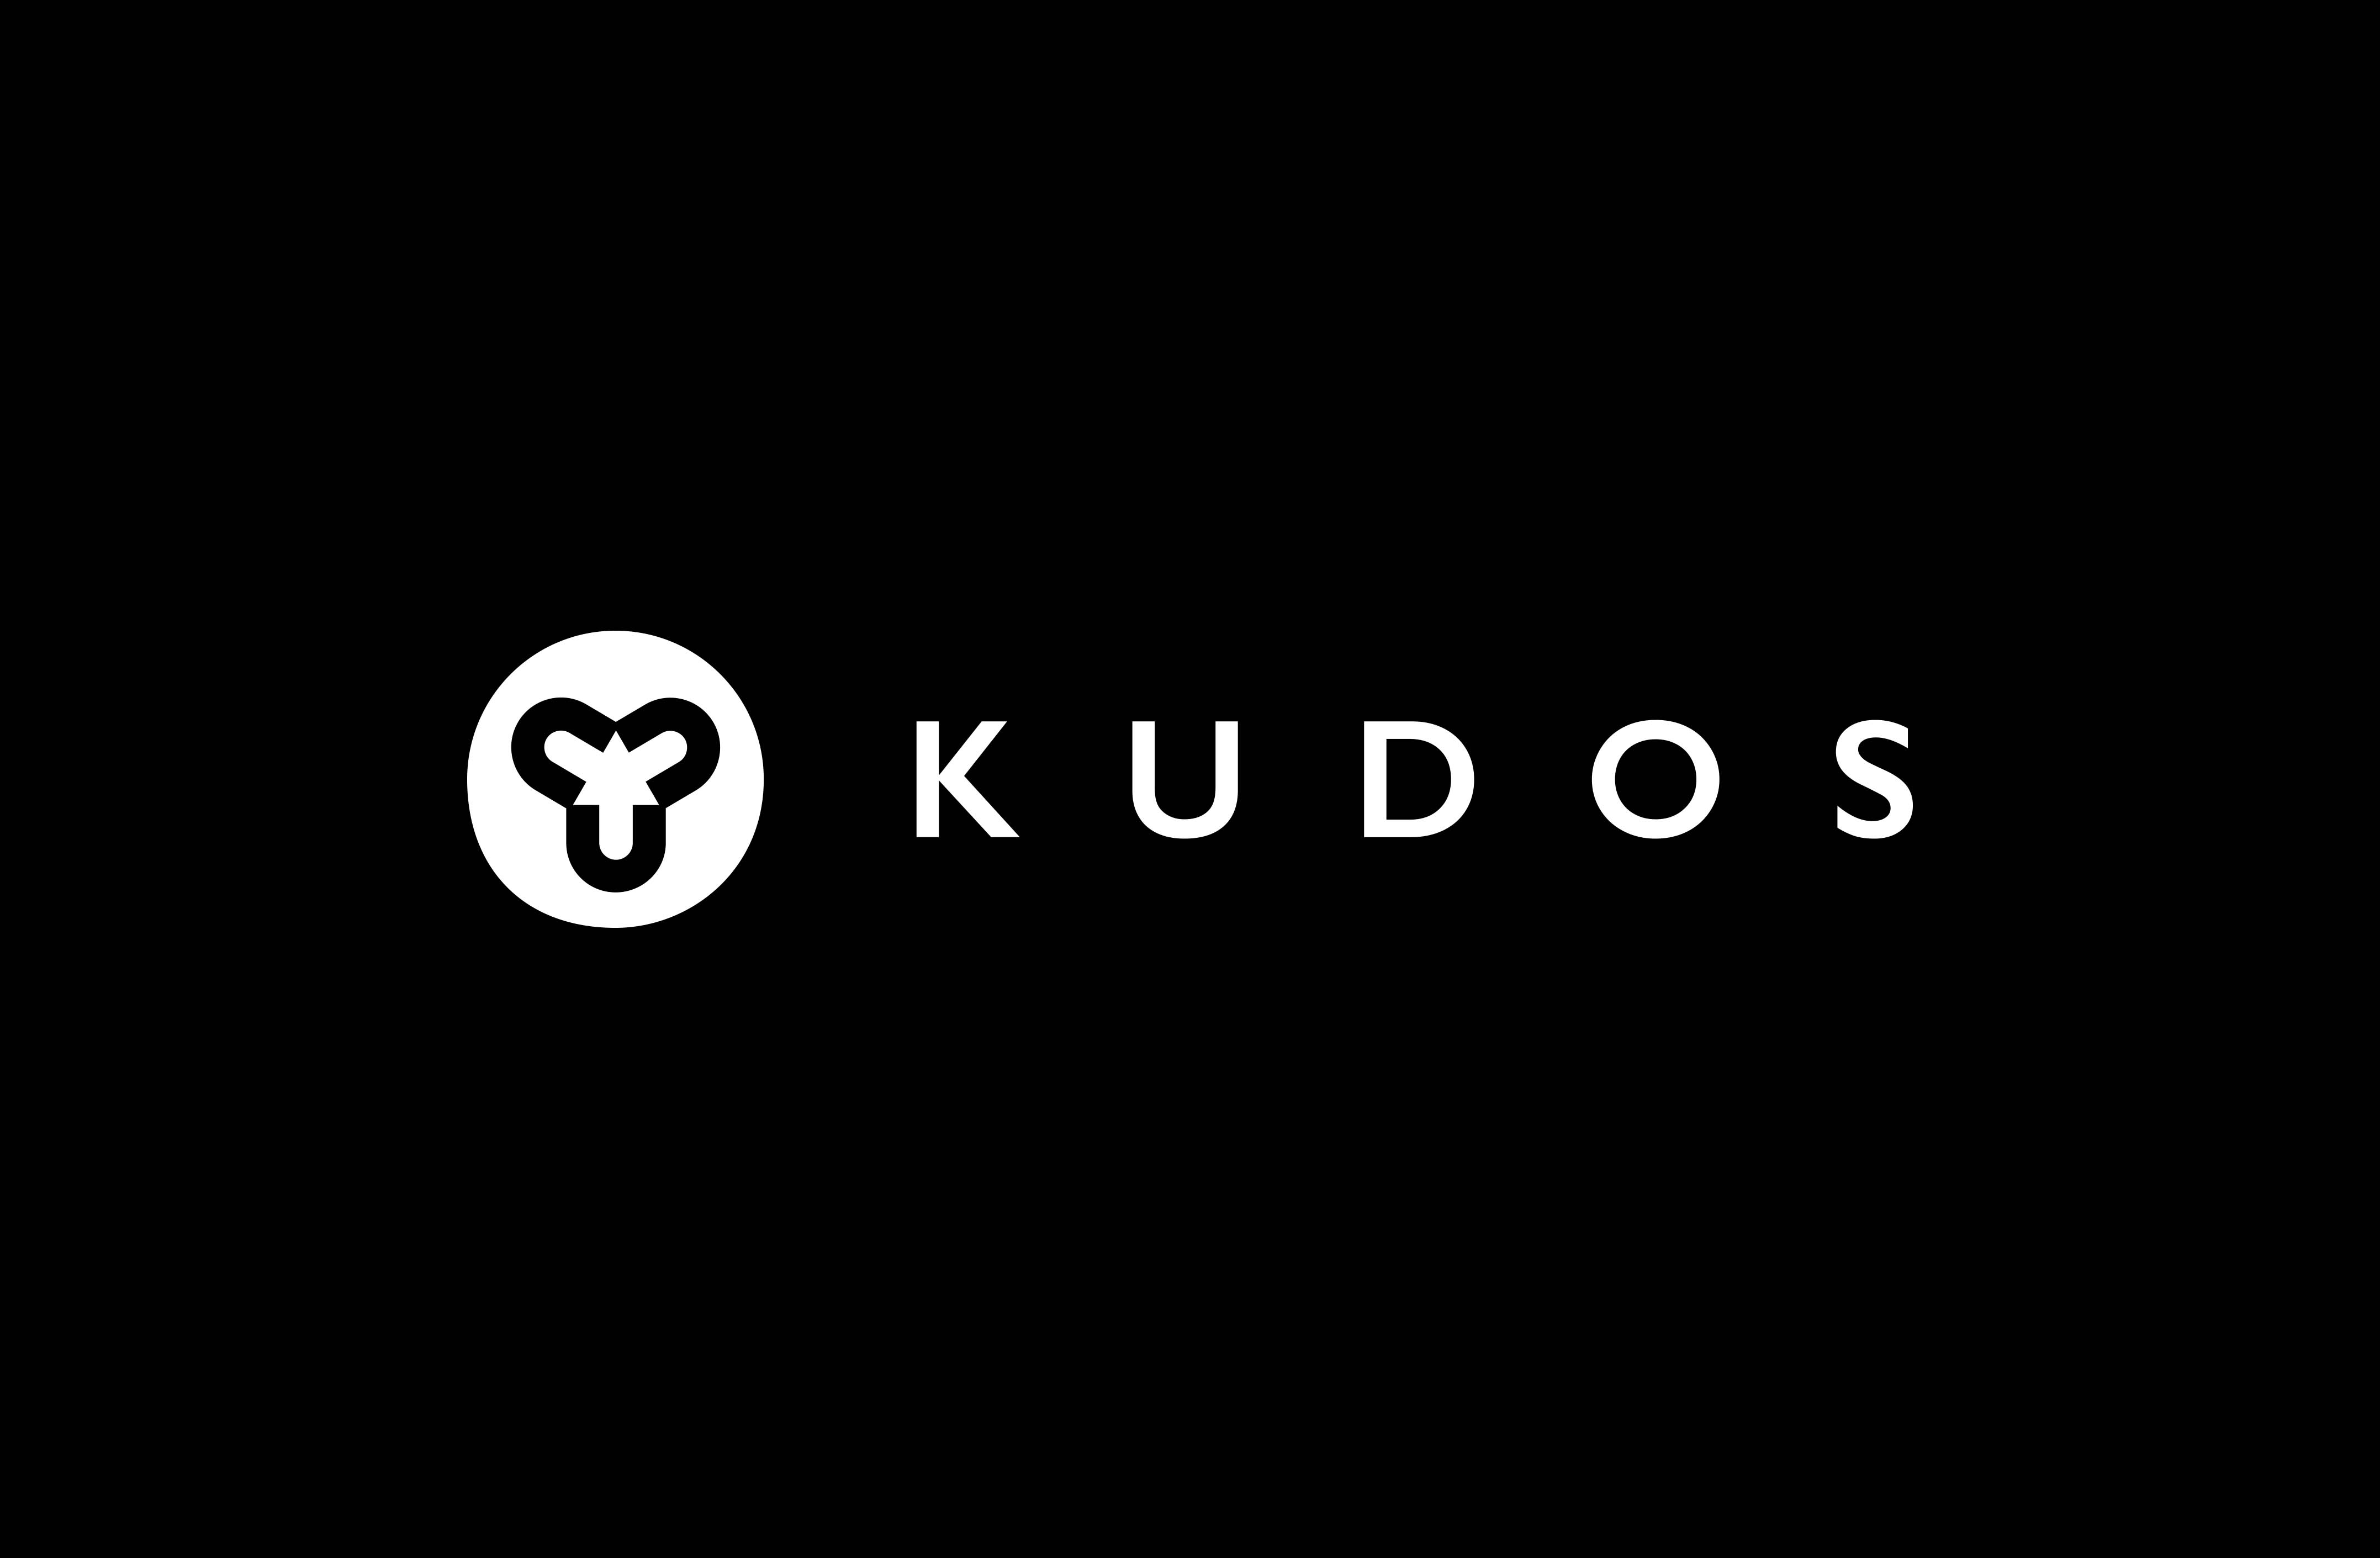 Kudos ‘building up’ for a very special Bristol Show 2015